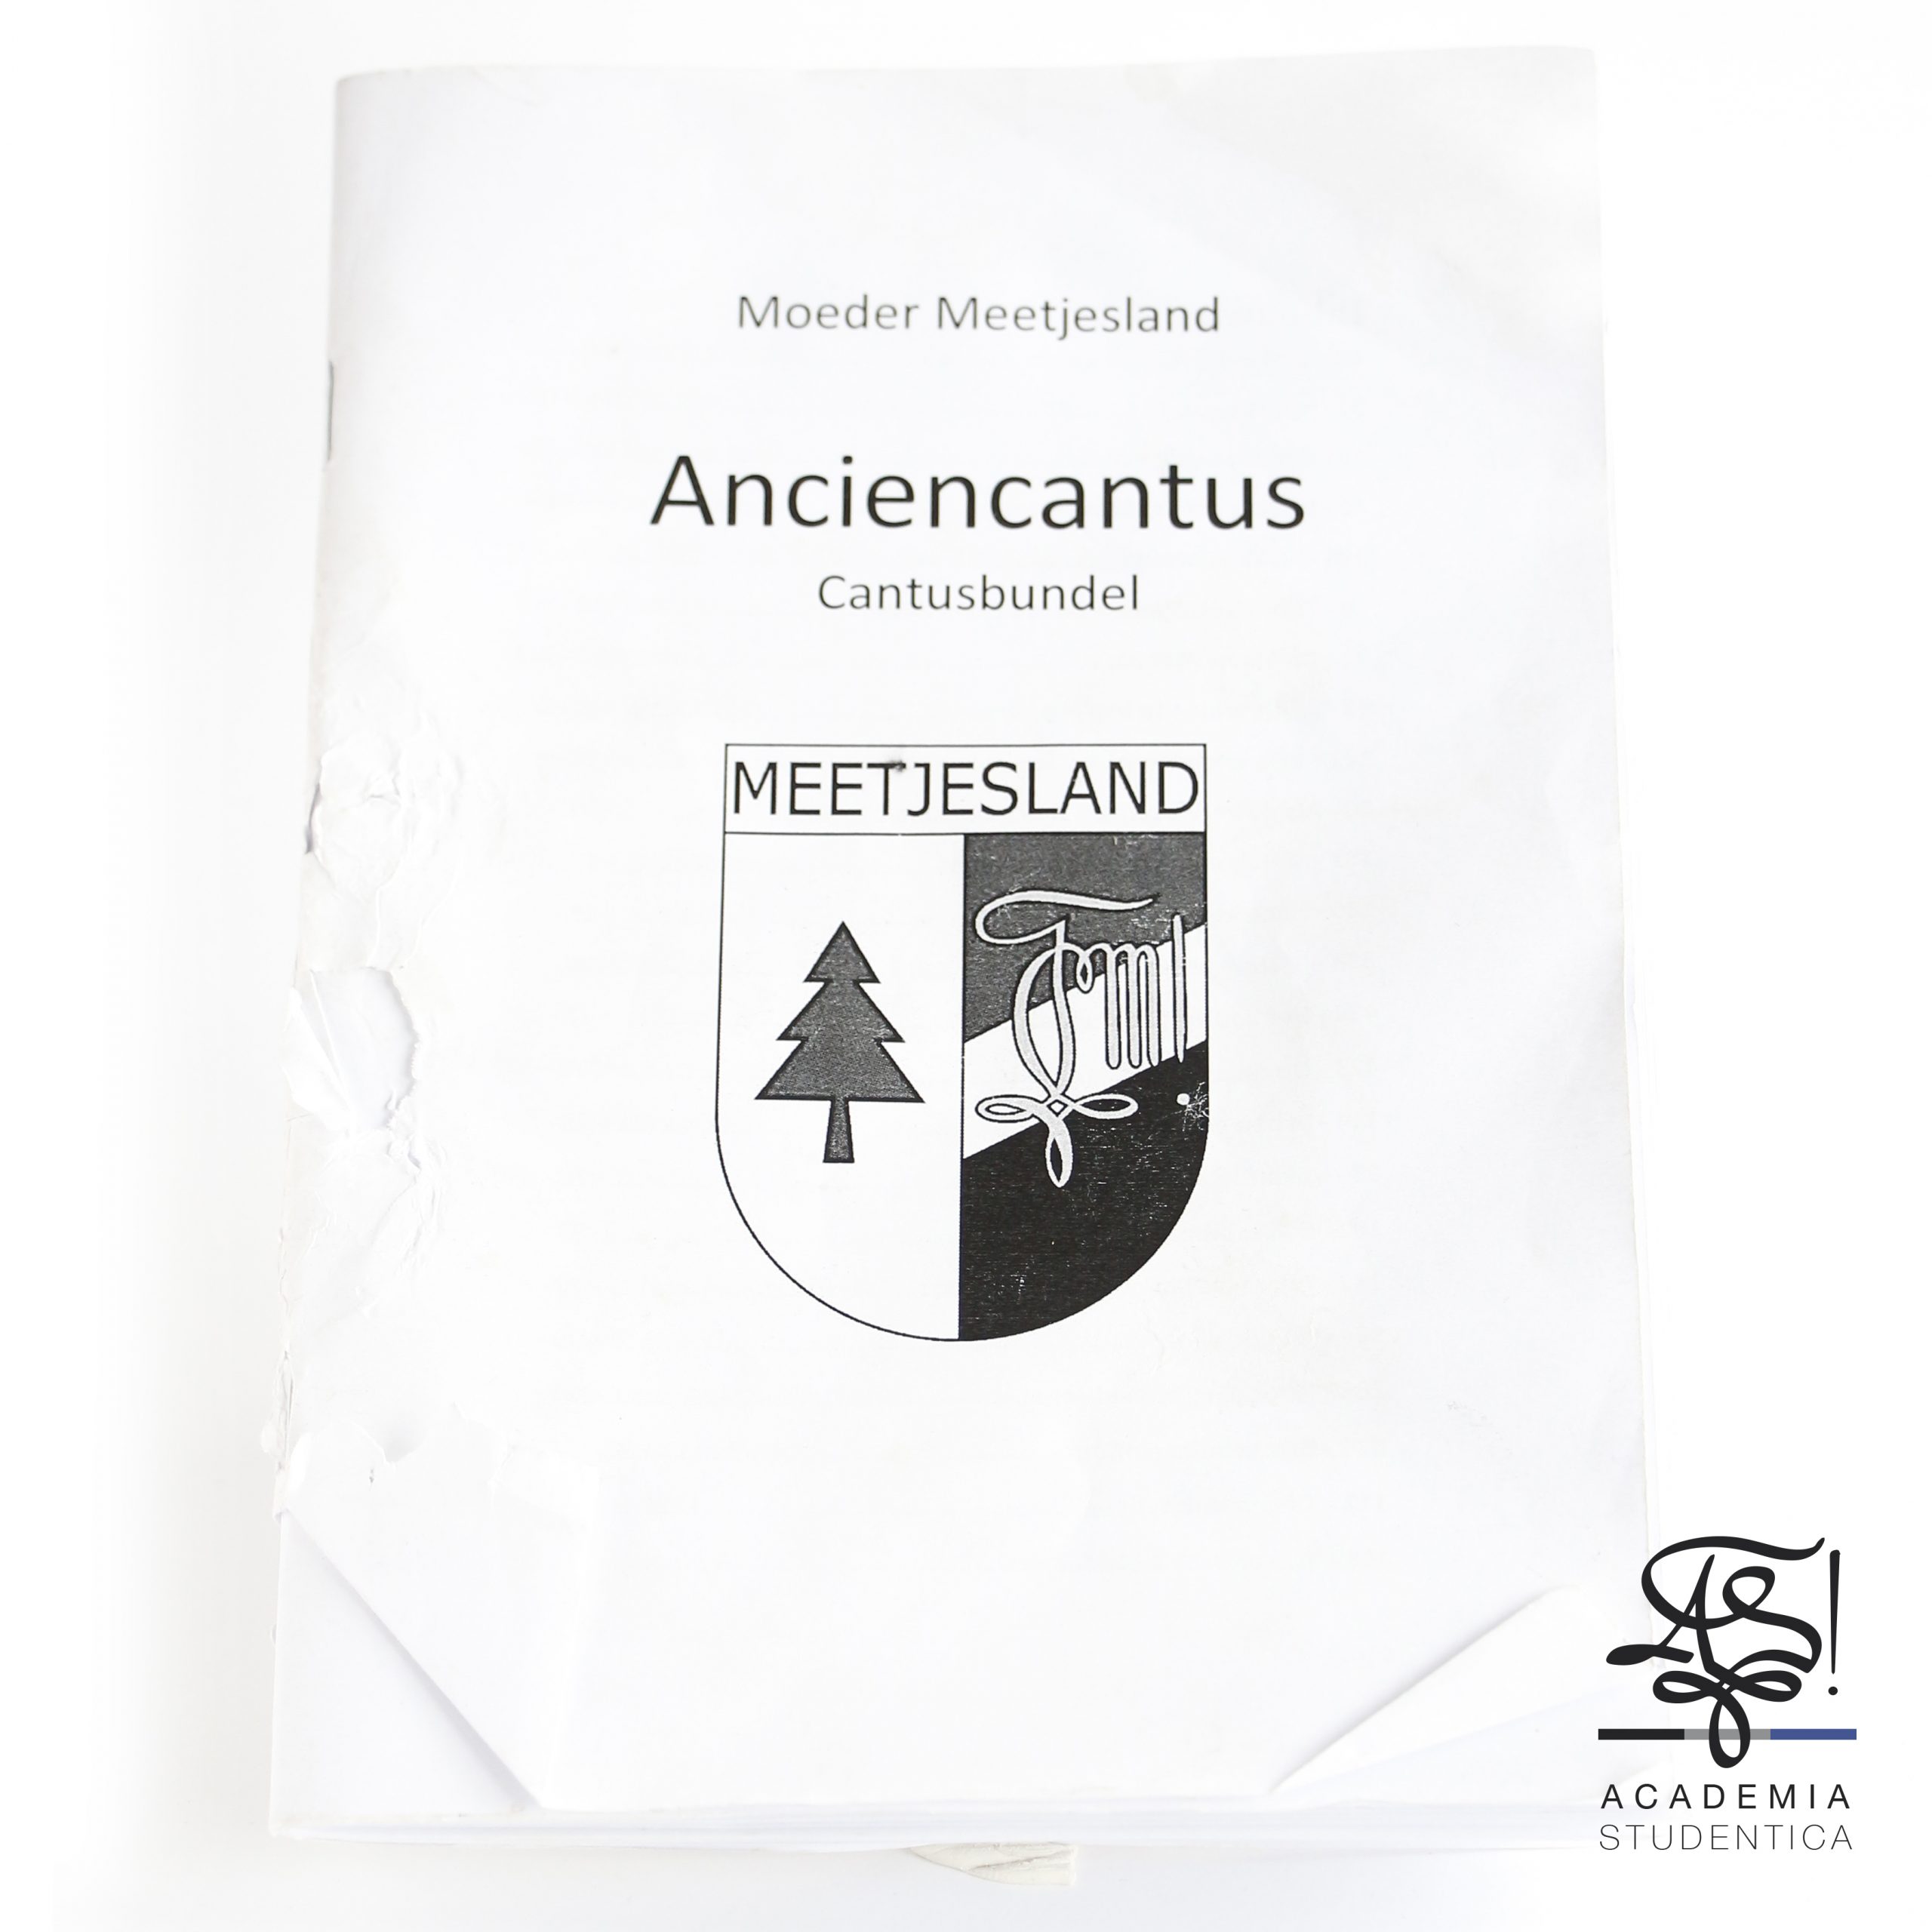 Read more about the article Moeder Meetjesland, Anciencantus Cantusbundel, Belgium, Leuven.